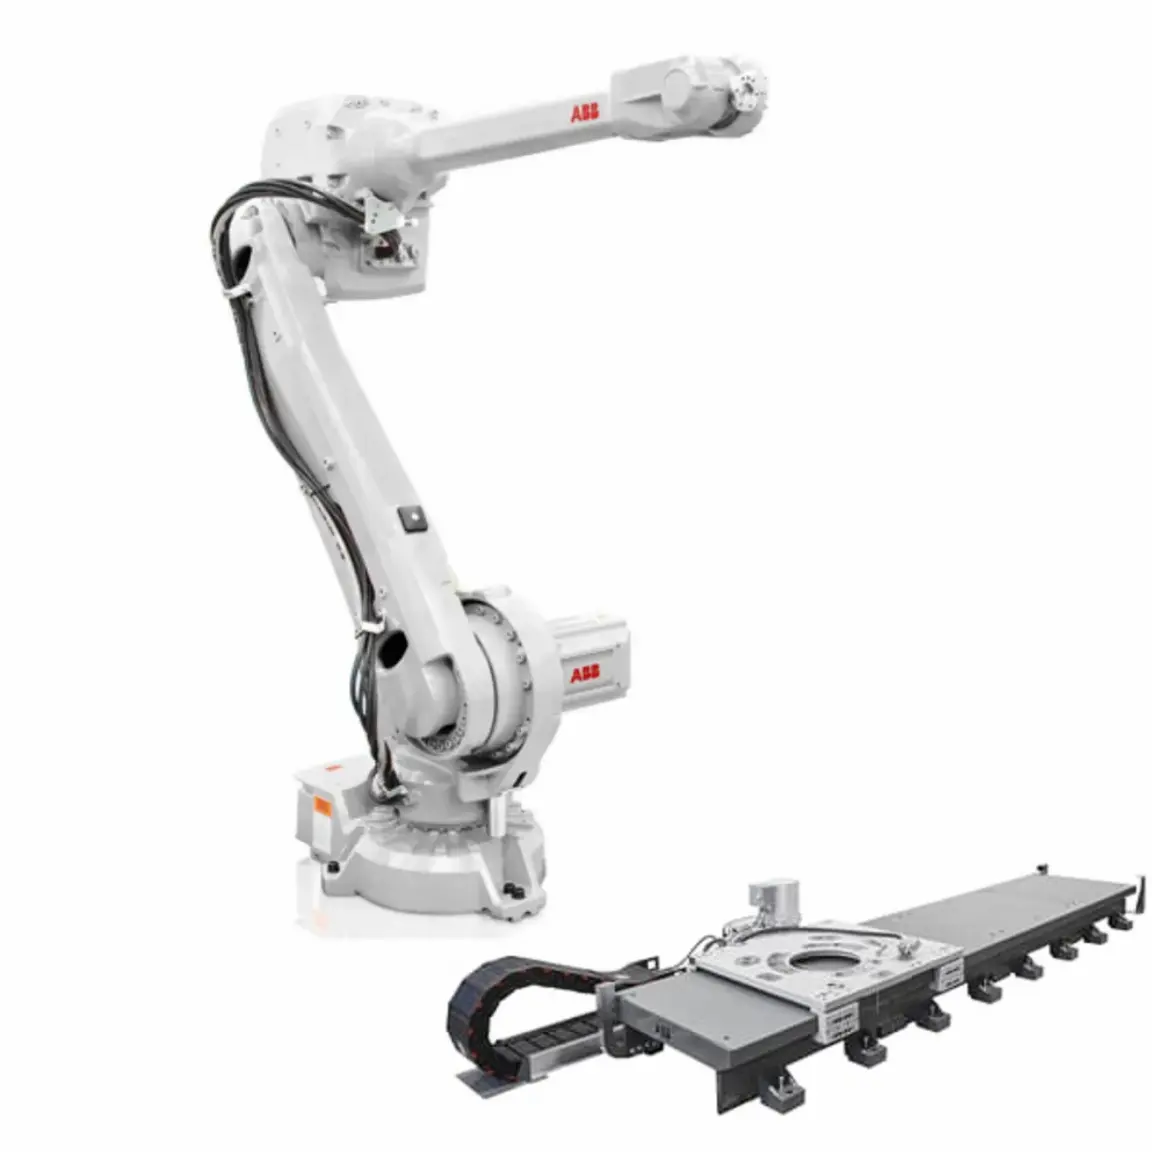 Robot industriale ABB IRB 4600 45kg carico utile 2050mm Reach Painting Robot braccio robotico a 6 assi con binario